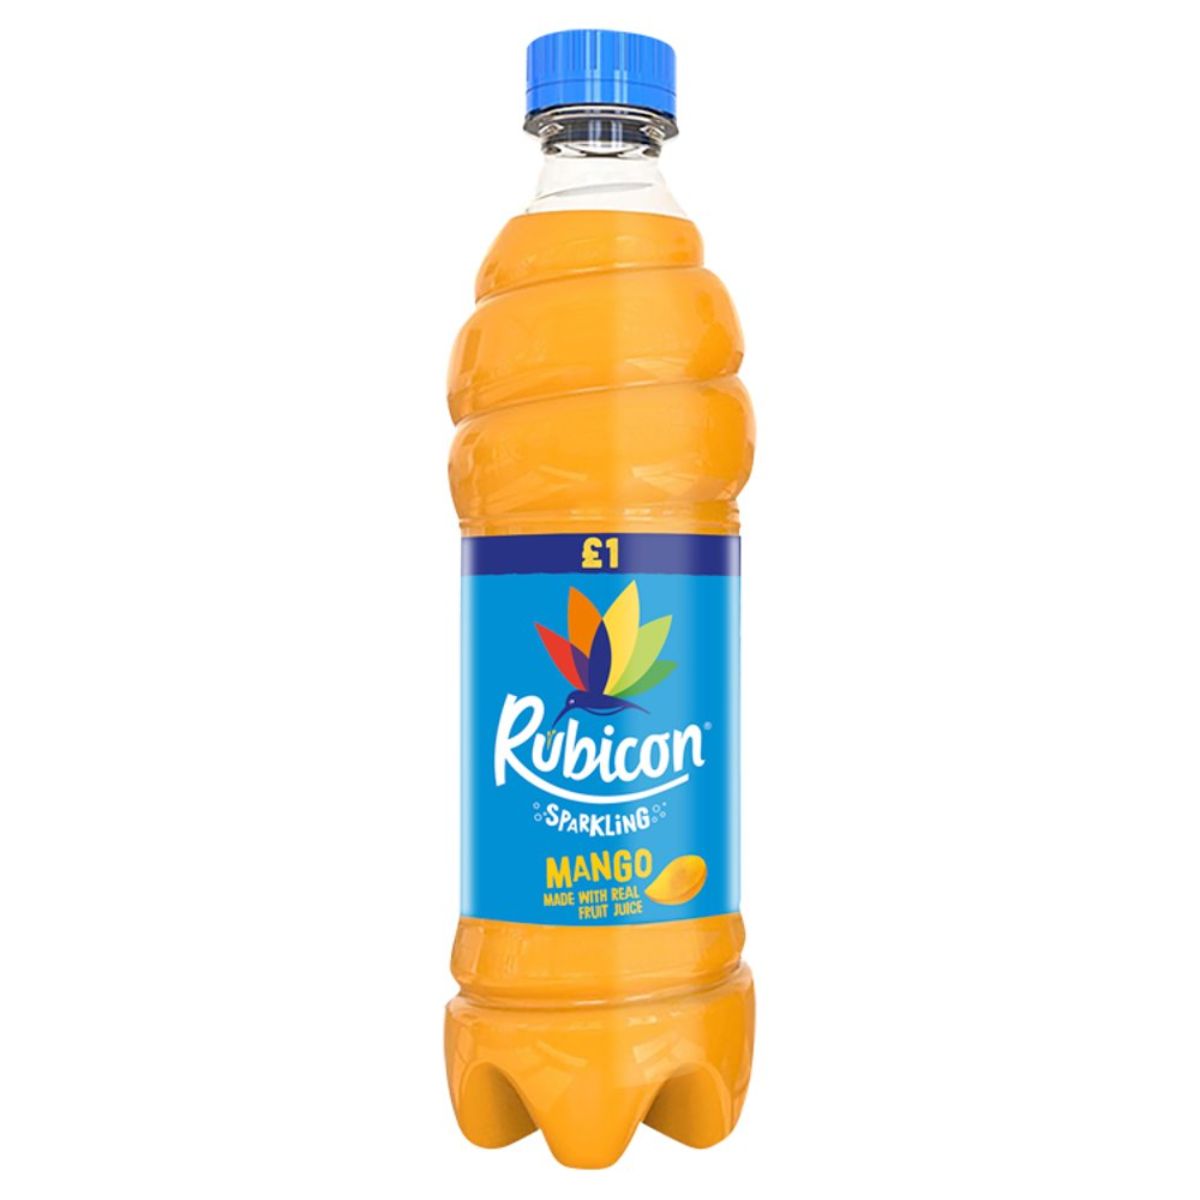 A bottle of Rubicon - Sparkling Mango - 500ml on a white background.